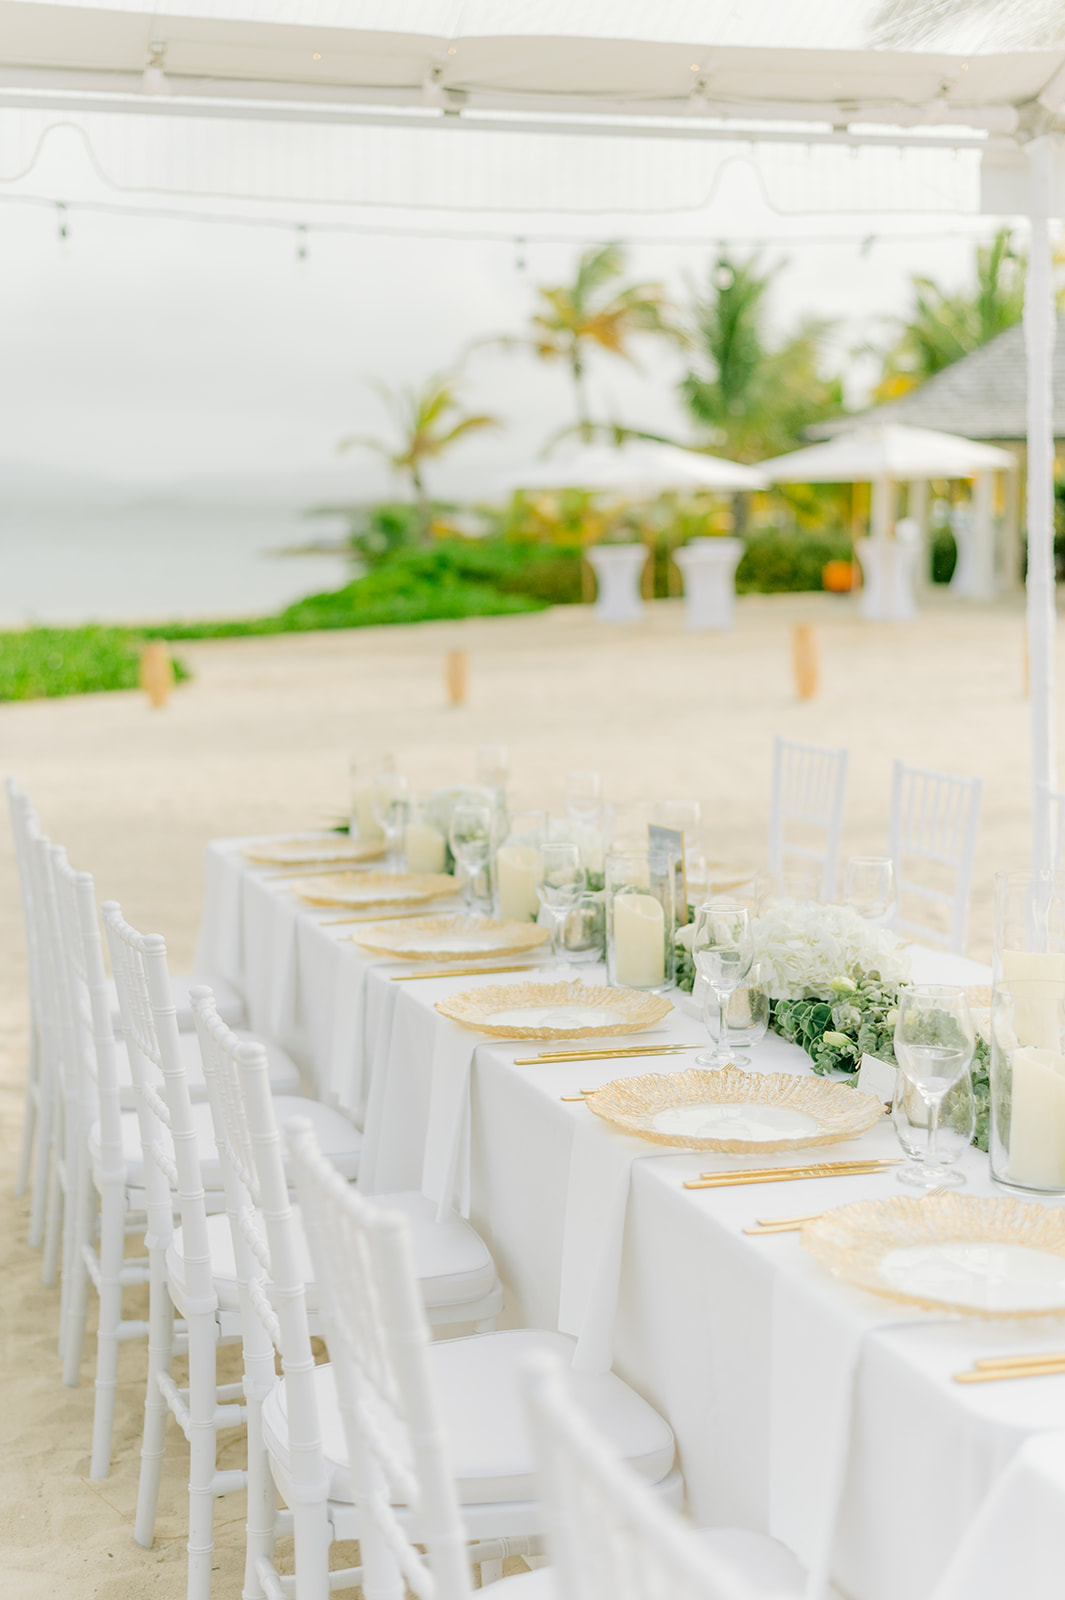 "Candid Reception Photos at a Luxury Antigua Wedding"
